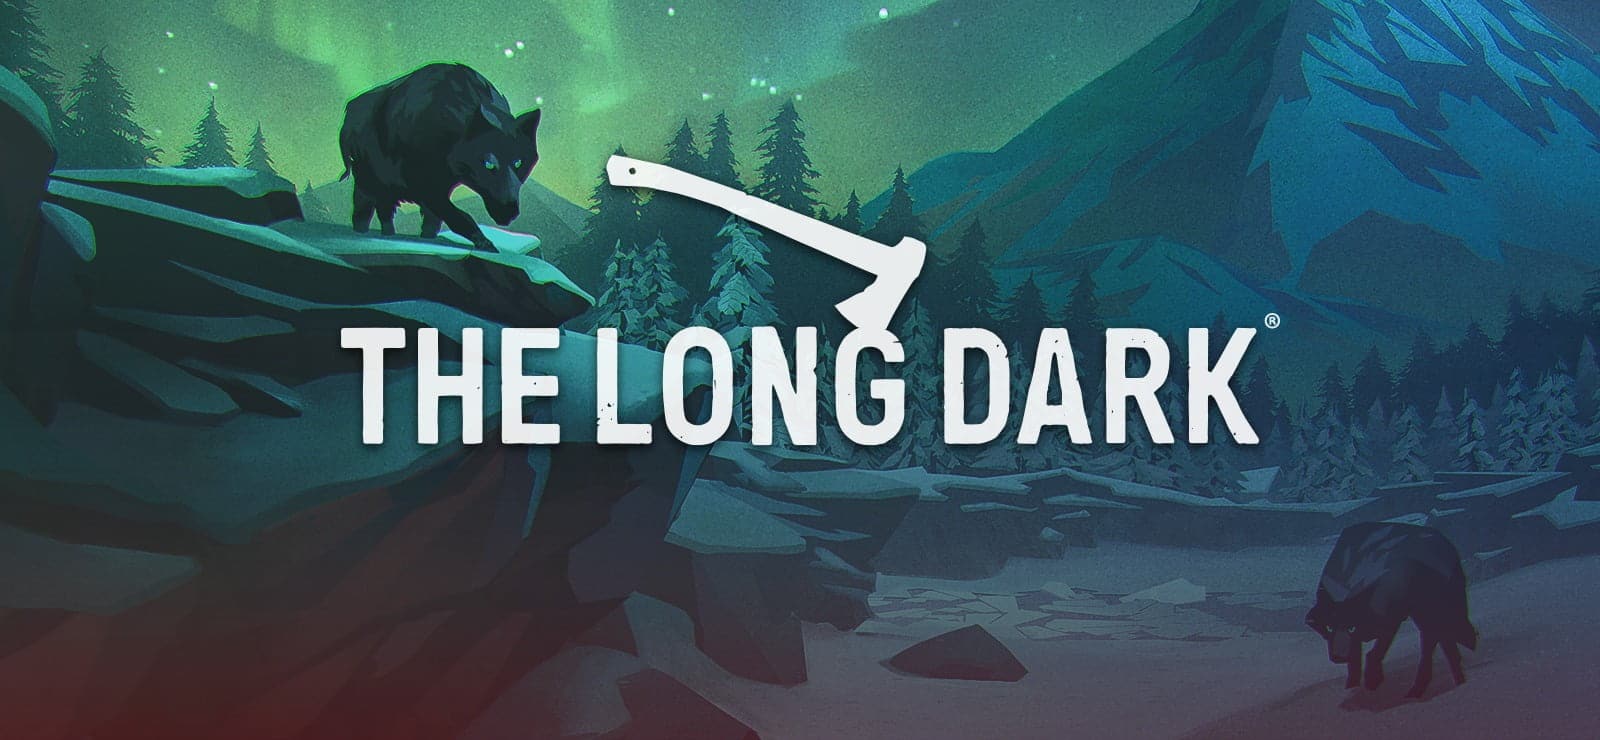 the long dark map